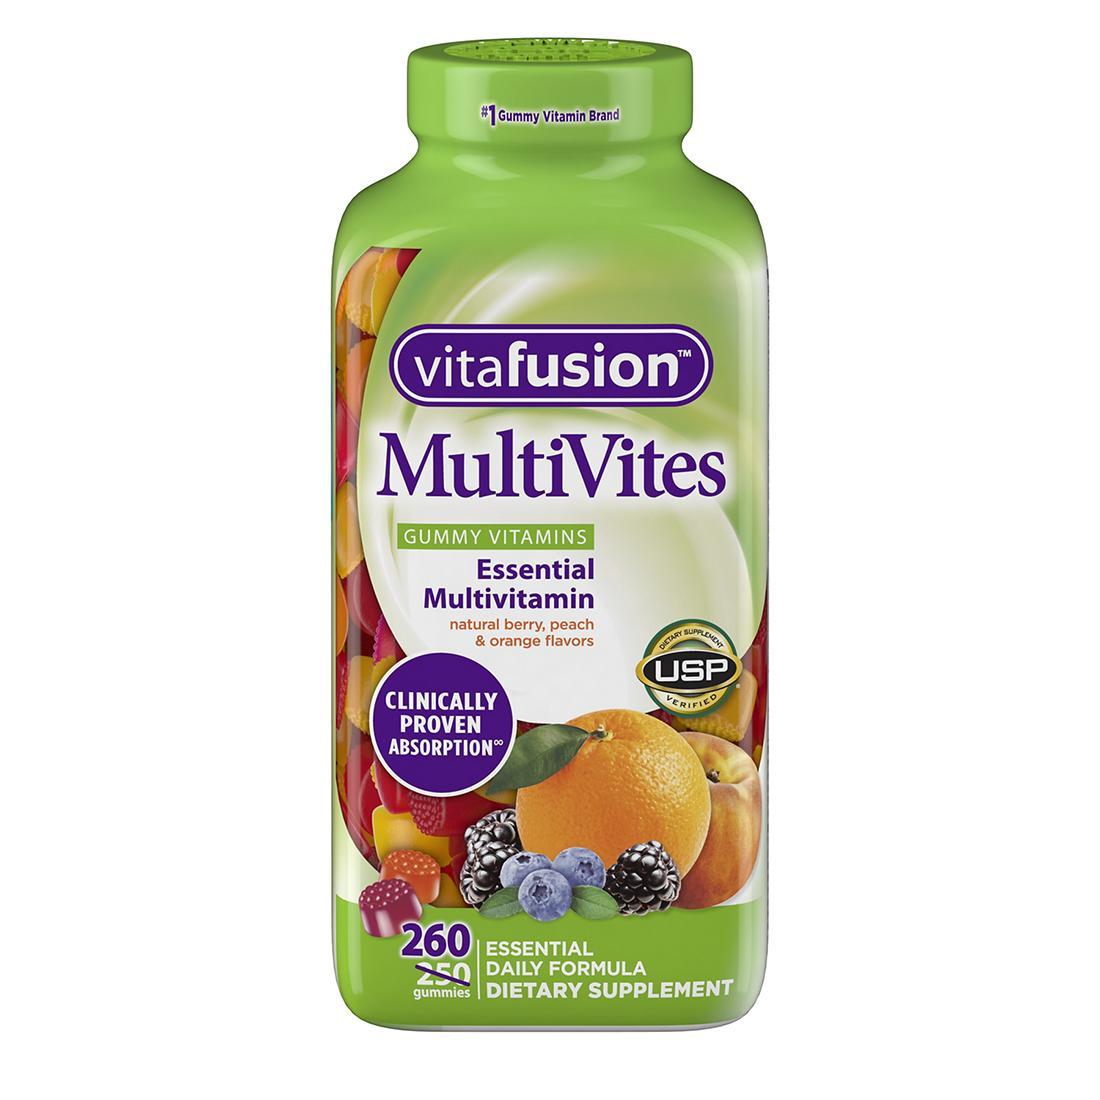 Vitafusion MultiVites Chewable Gummy Multivitamin Dietary Supplement, 260 ct - $22.99 - $39.99